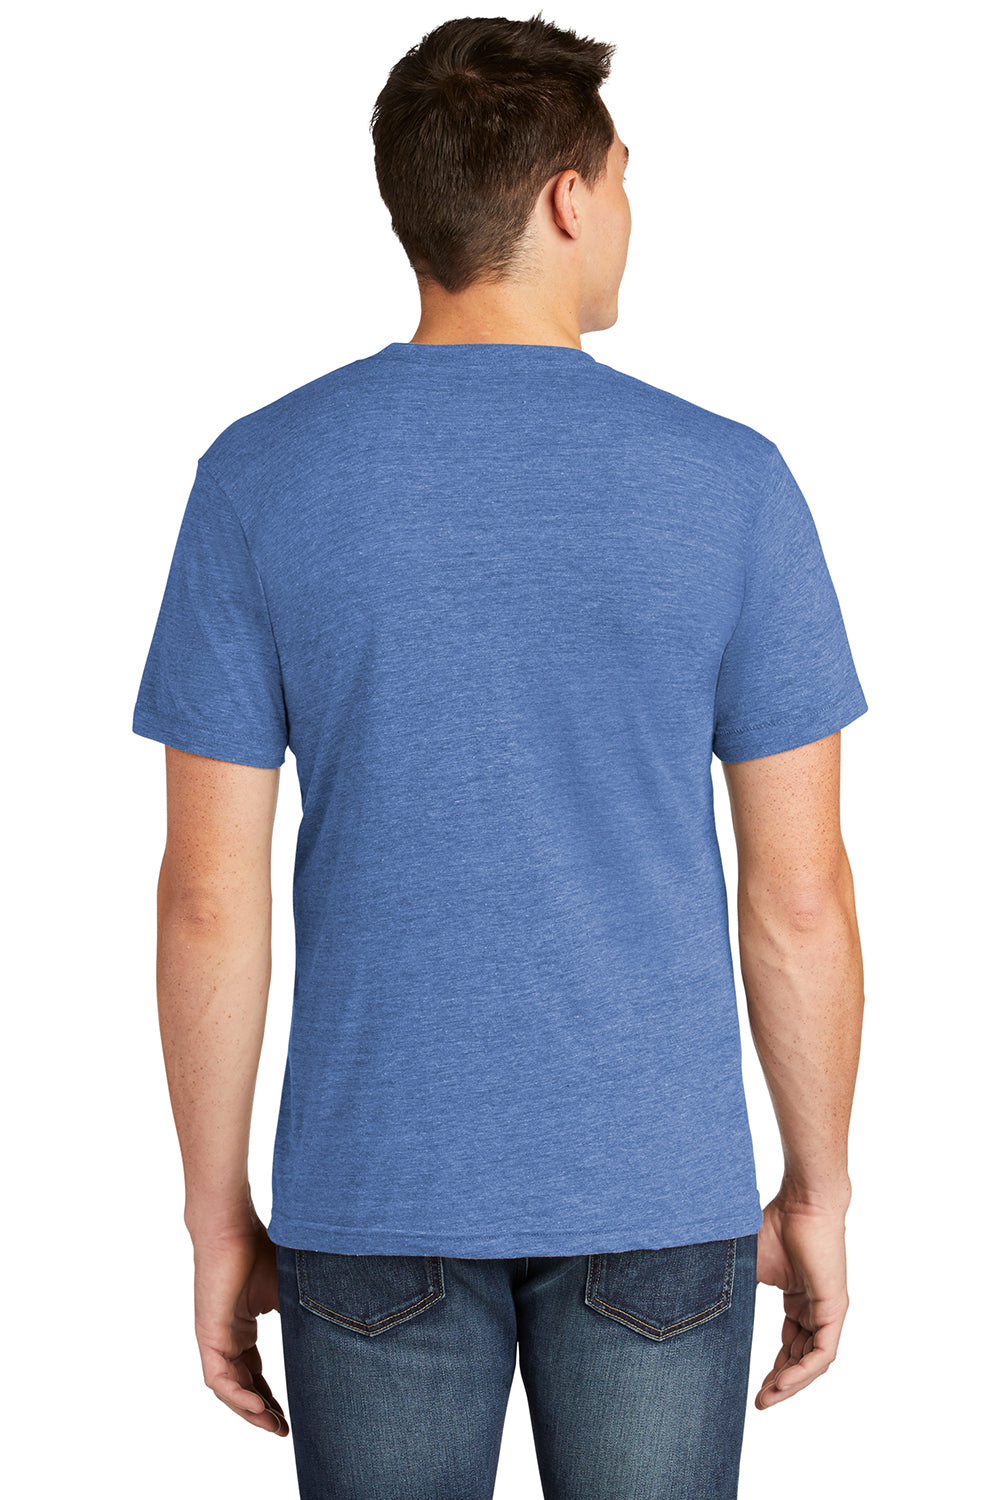 American Apparel TR401 Mens Track Short Sleeve Crewneck T-Shirt Athletic Blue Model Back